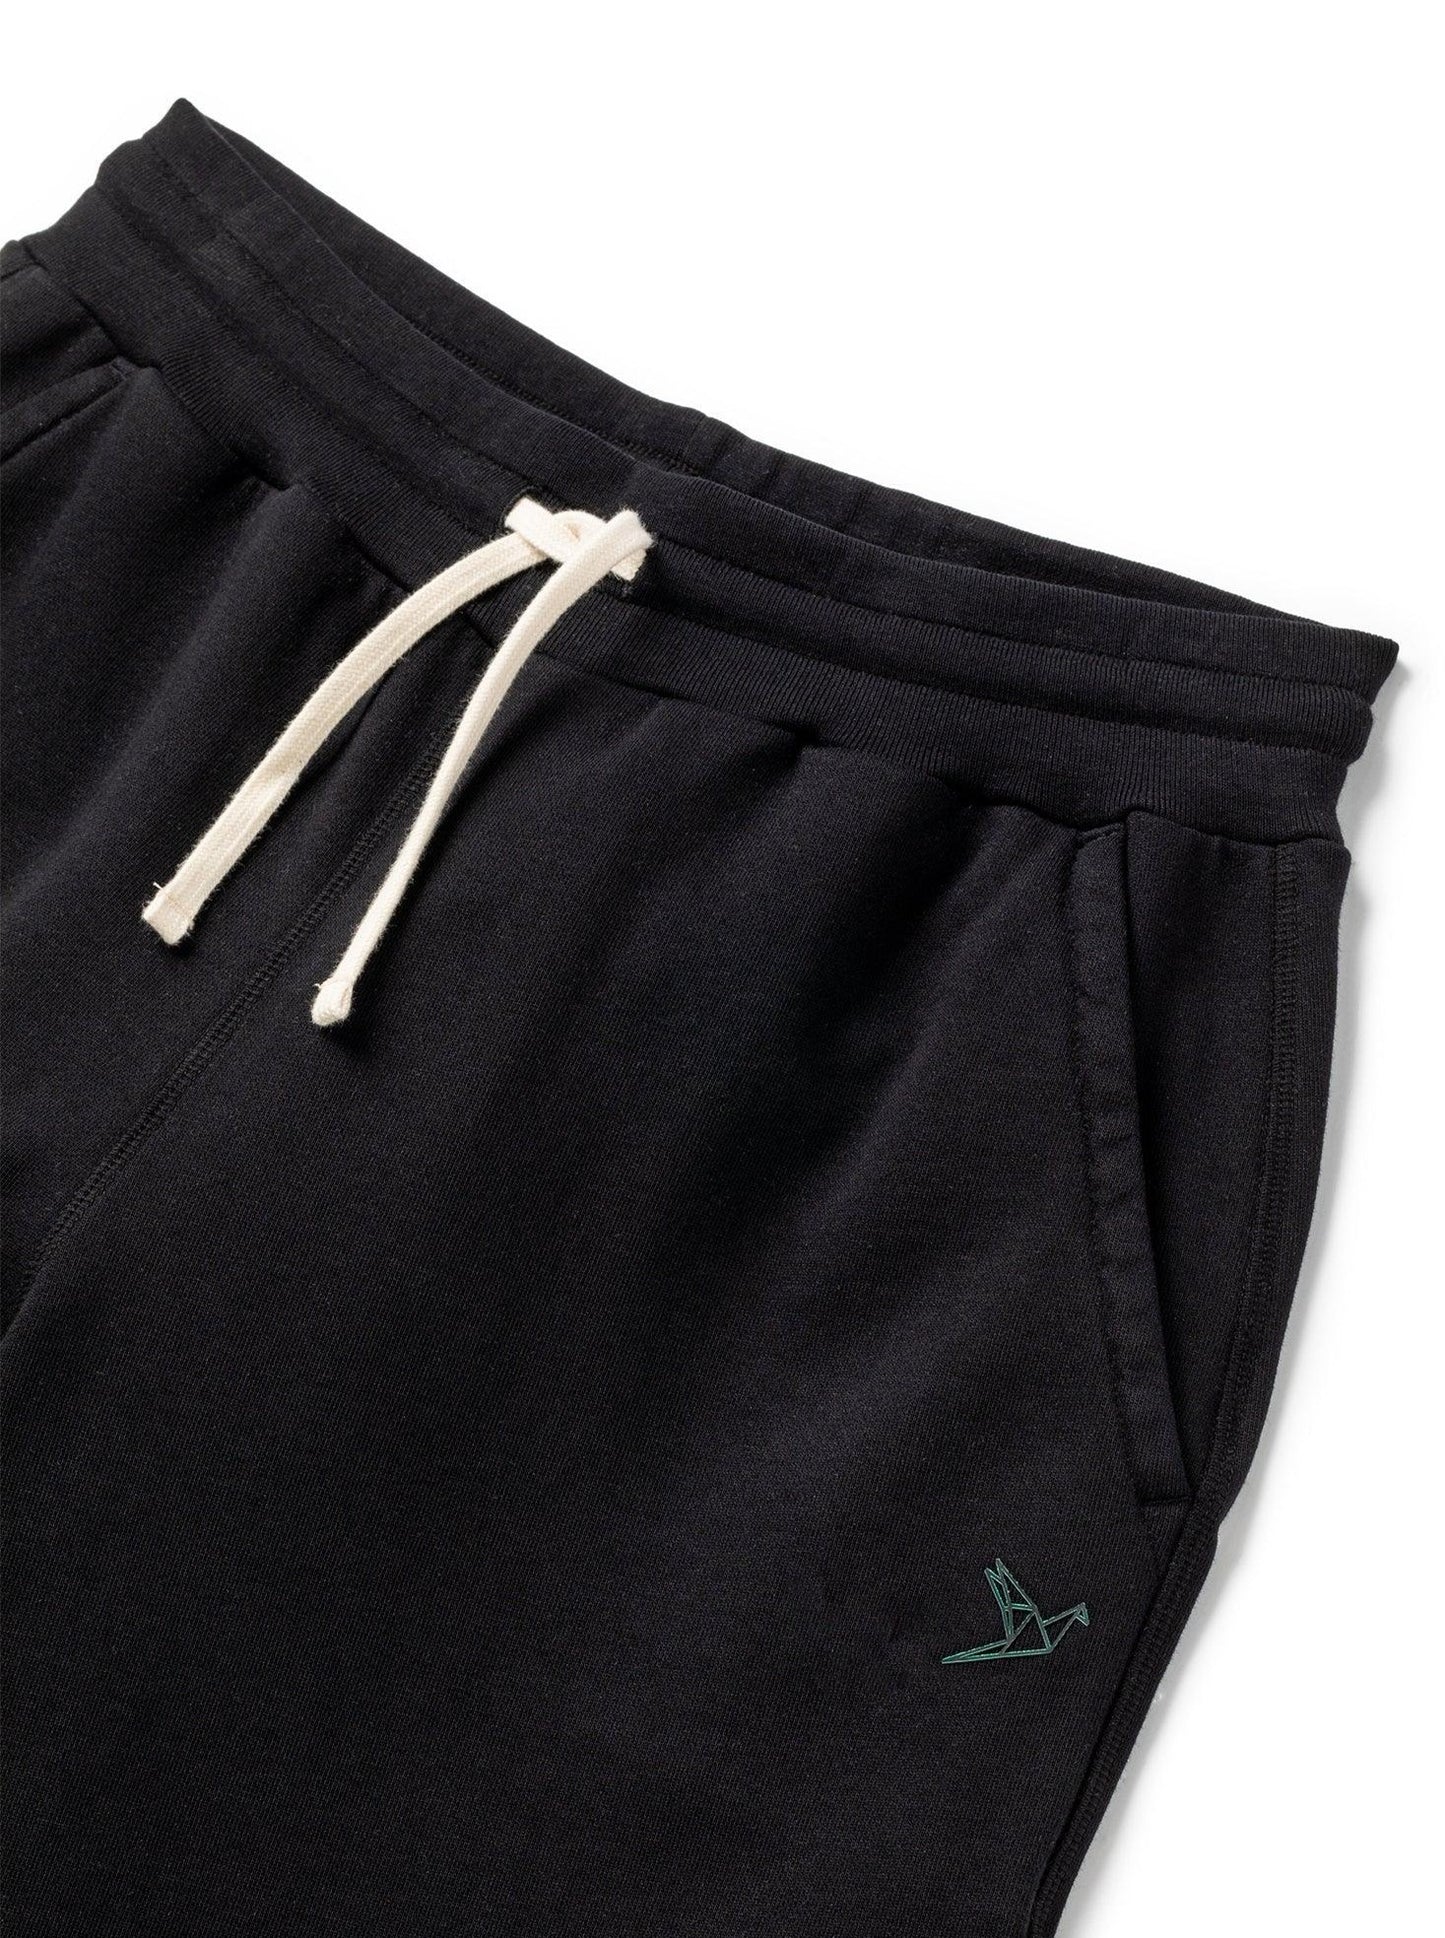 
                  
                    Men's Sweat shorts - Black - ORILABO Project
                  
                